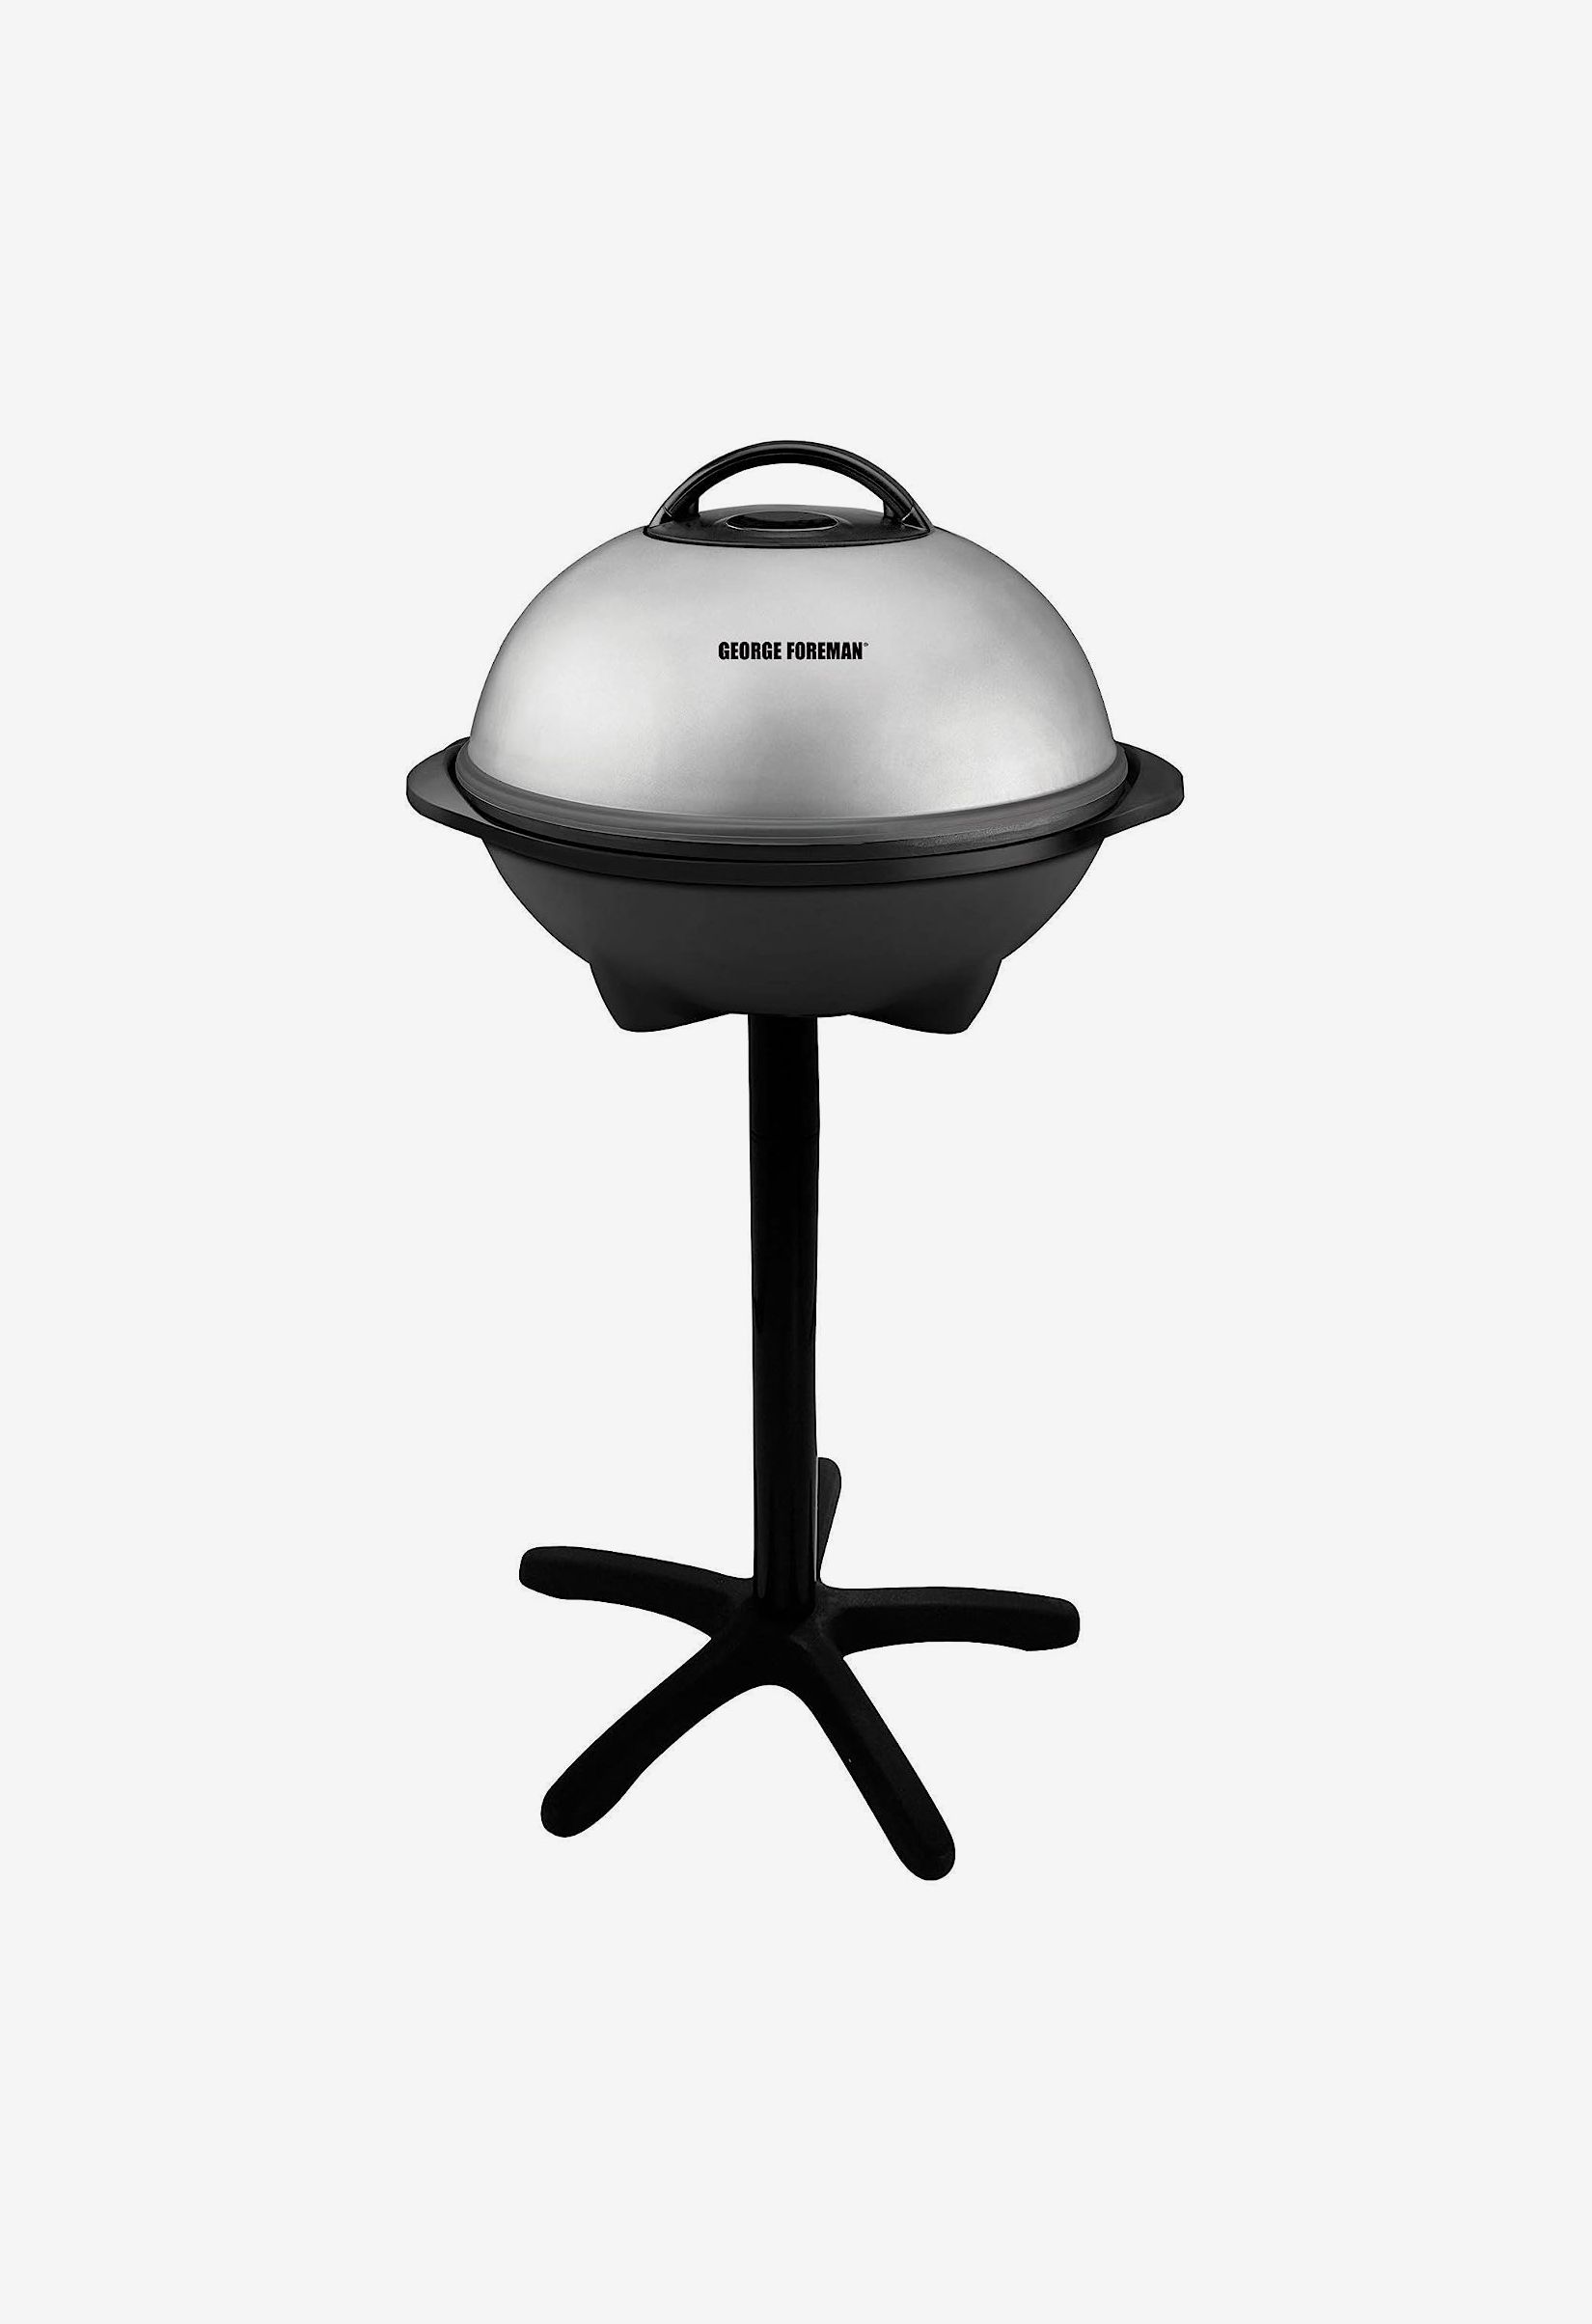 Portable Indoor/Outdoor Use 2 - Burner Countertop Electric Grill Artudatech